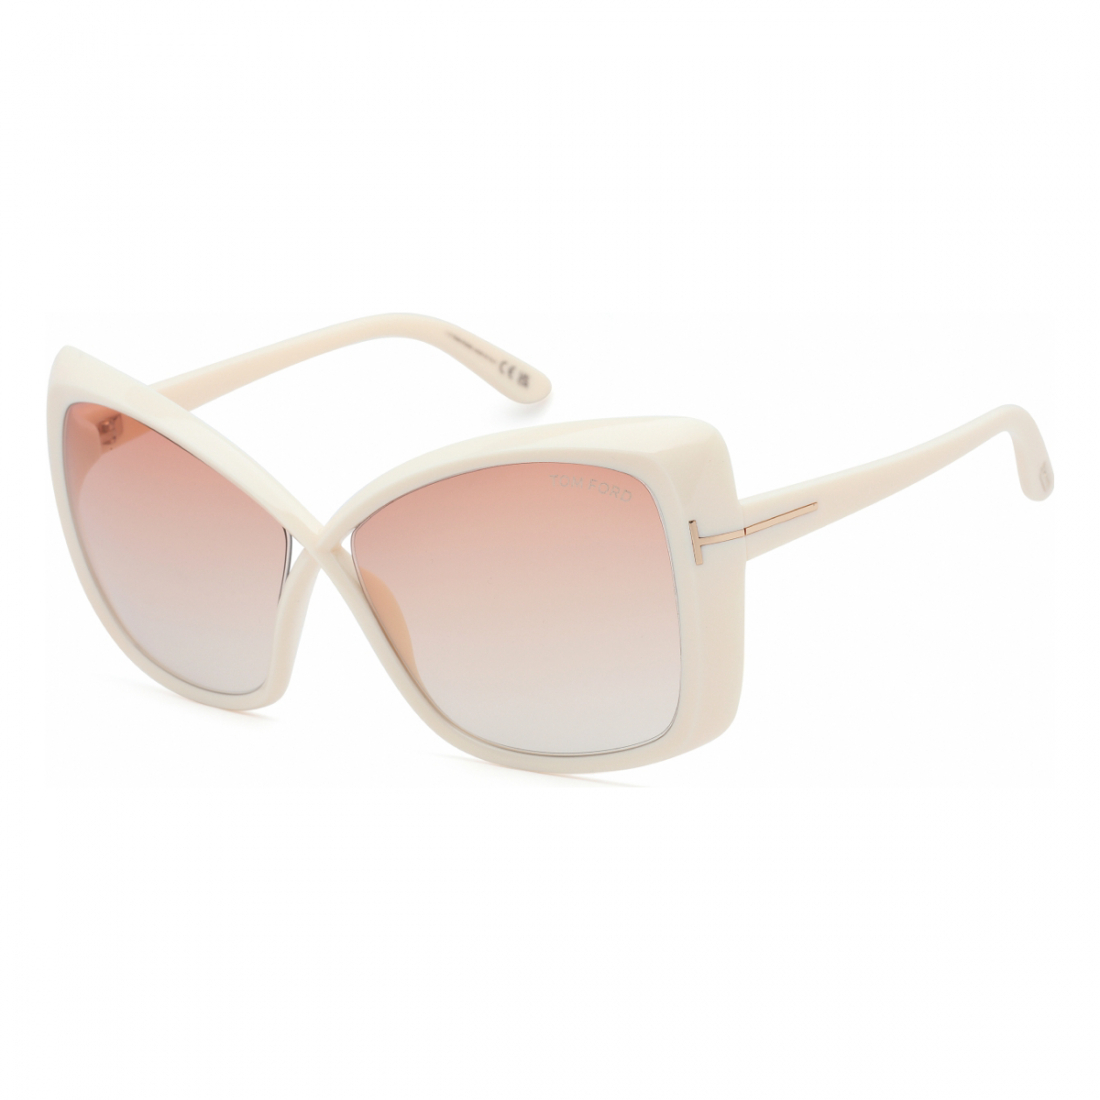 Women's 'FT0943' Sunglasses